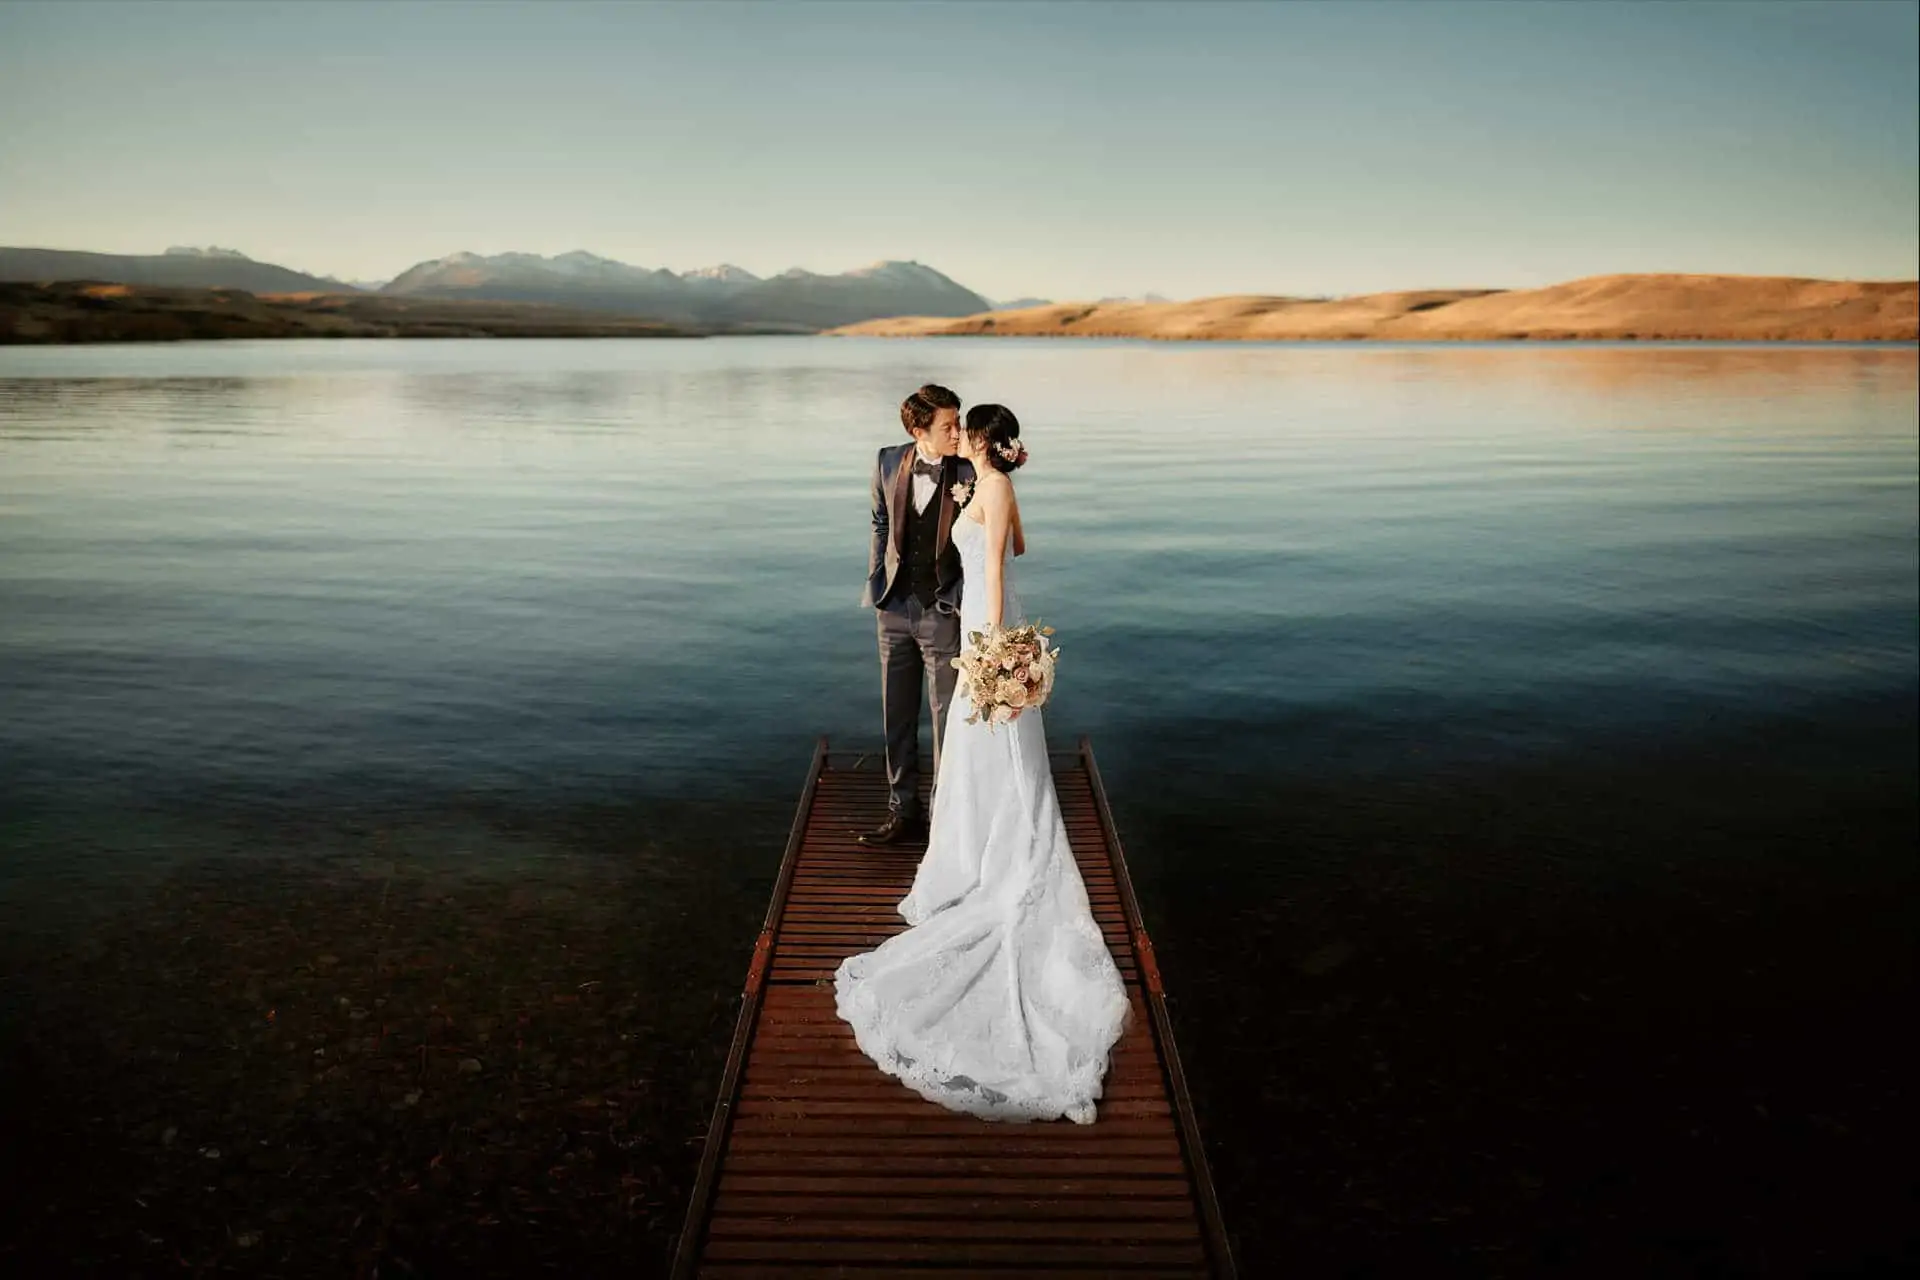 Mikiko & Hiroki's Queenstown & Tekapo NZ Pre-Wedding Shoot